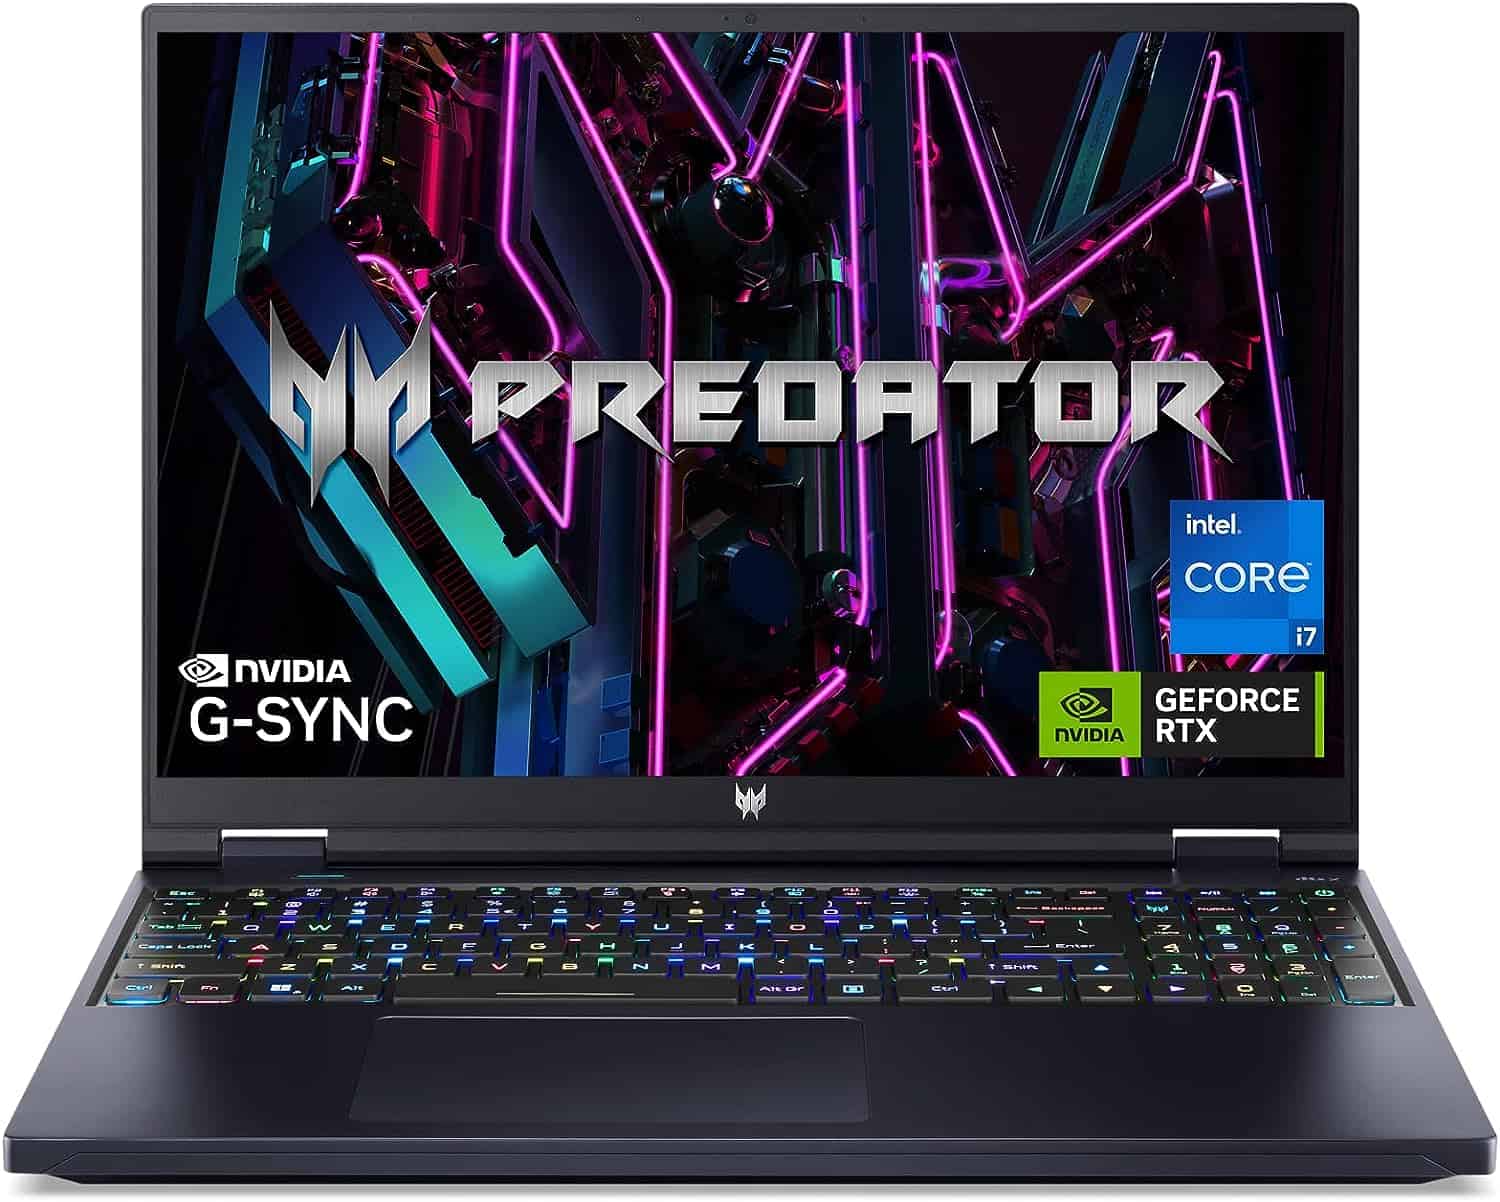 Acer predator laptop with Predator keyword.